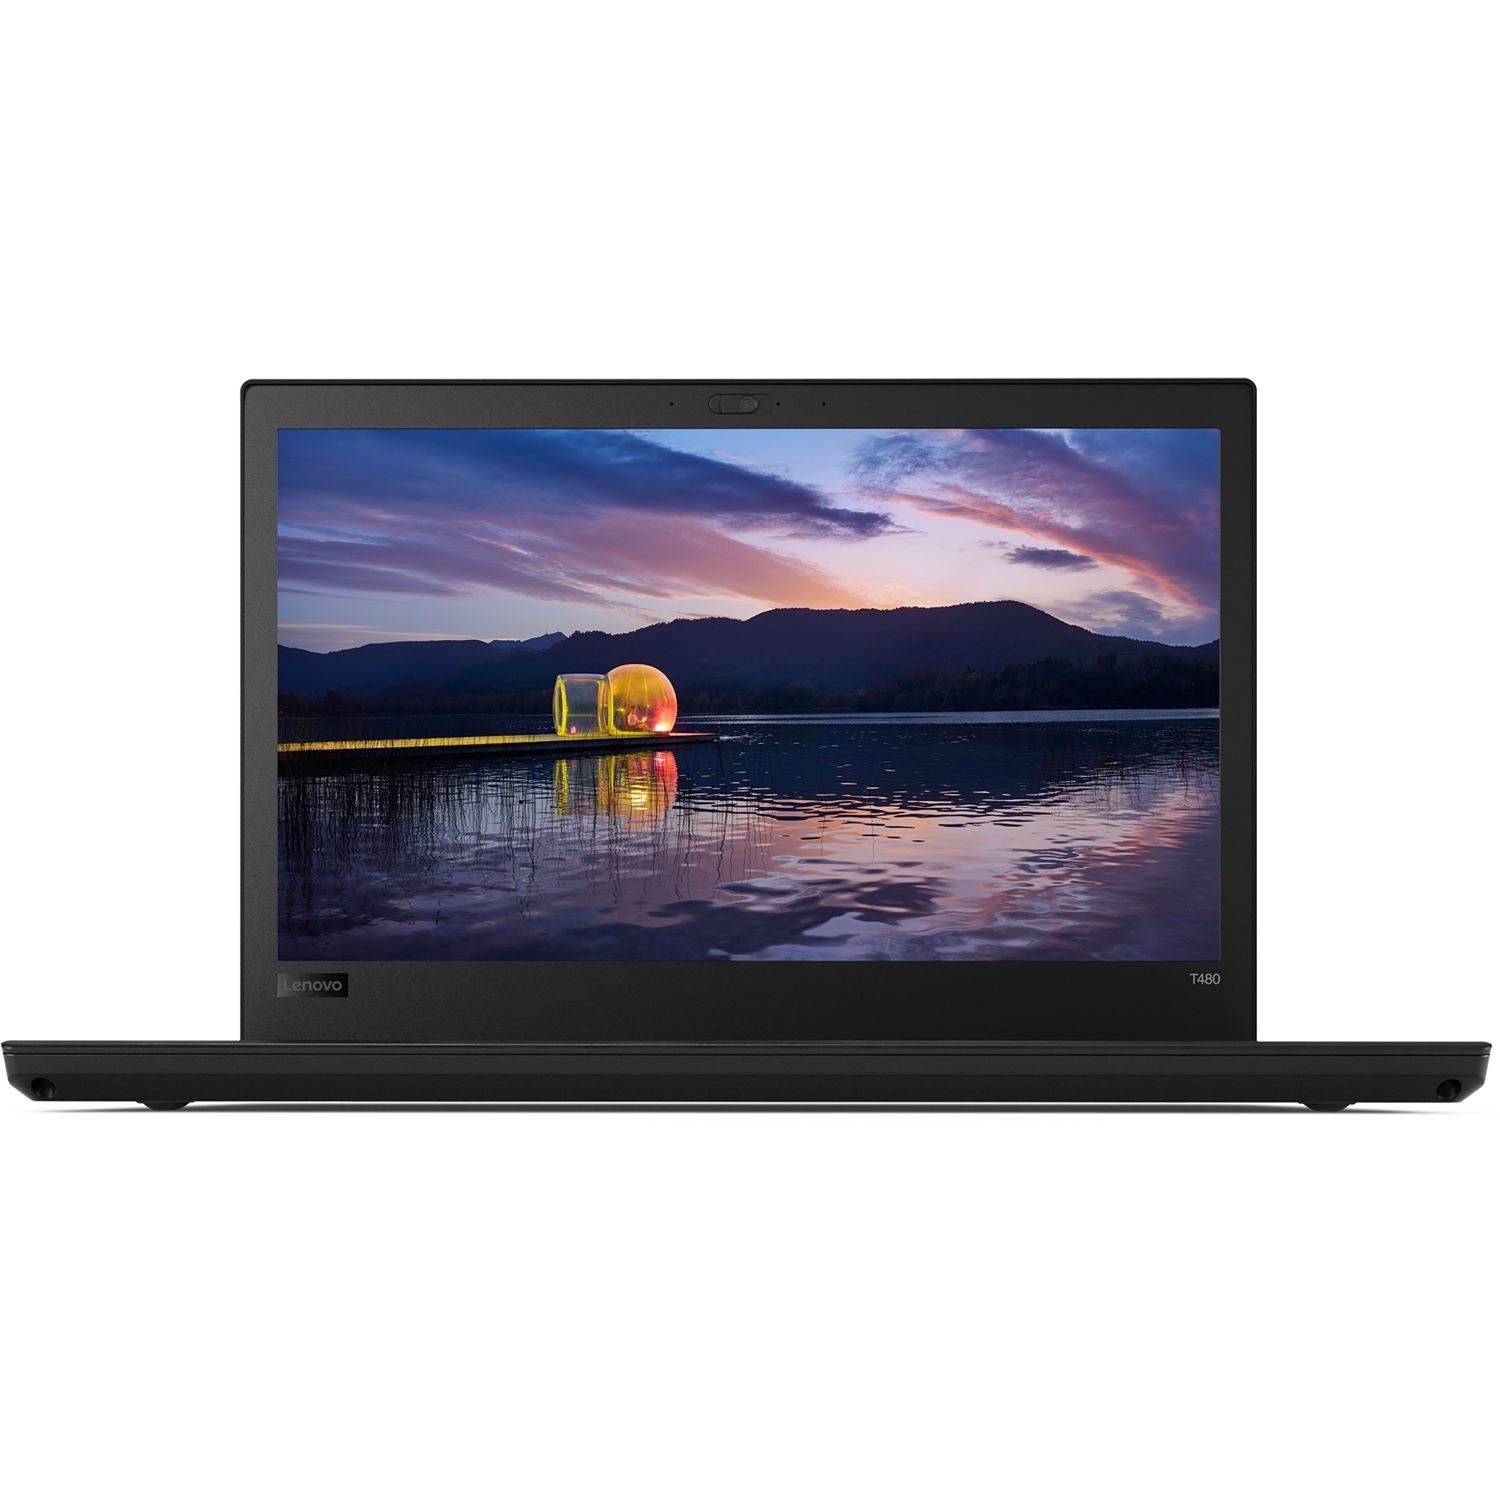 Refurbished (Good) - Lenovo Thinkpad T480 Laptop Intel Core i5-8350u 1.70 GHz 8GB Ram 256GB SSD W10P